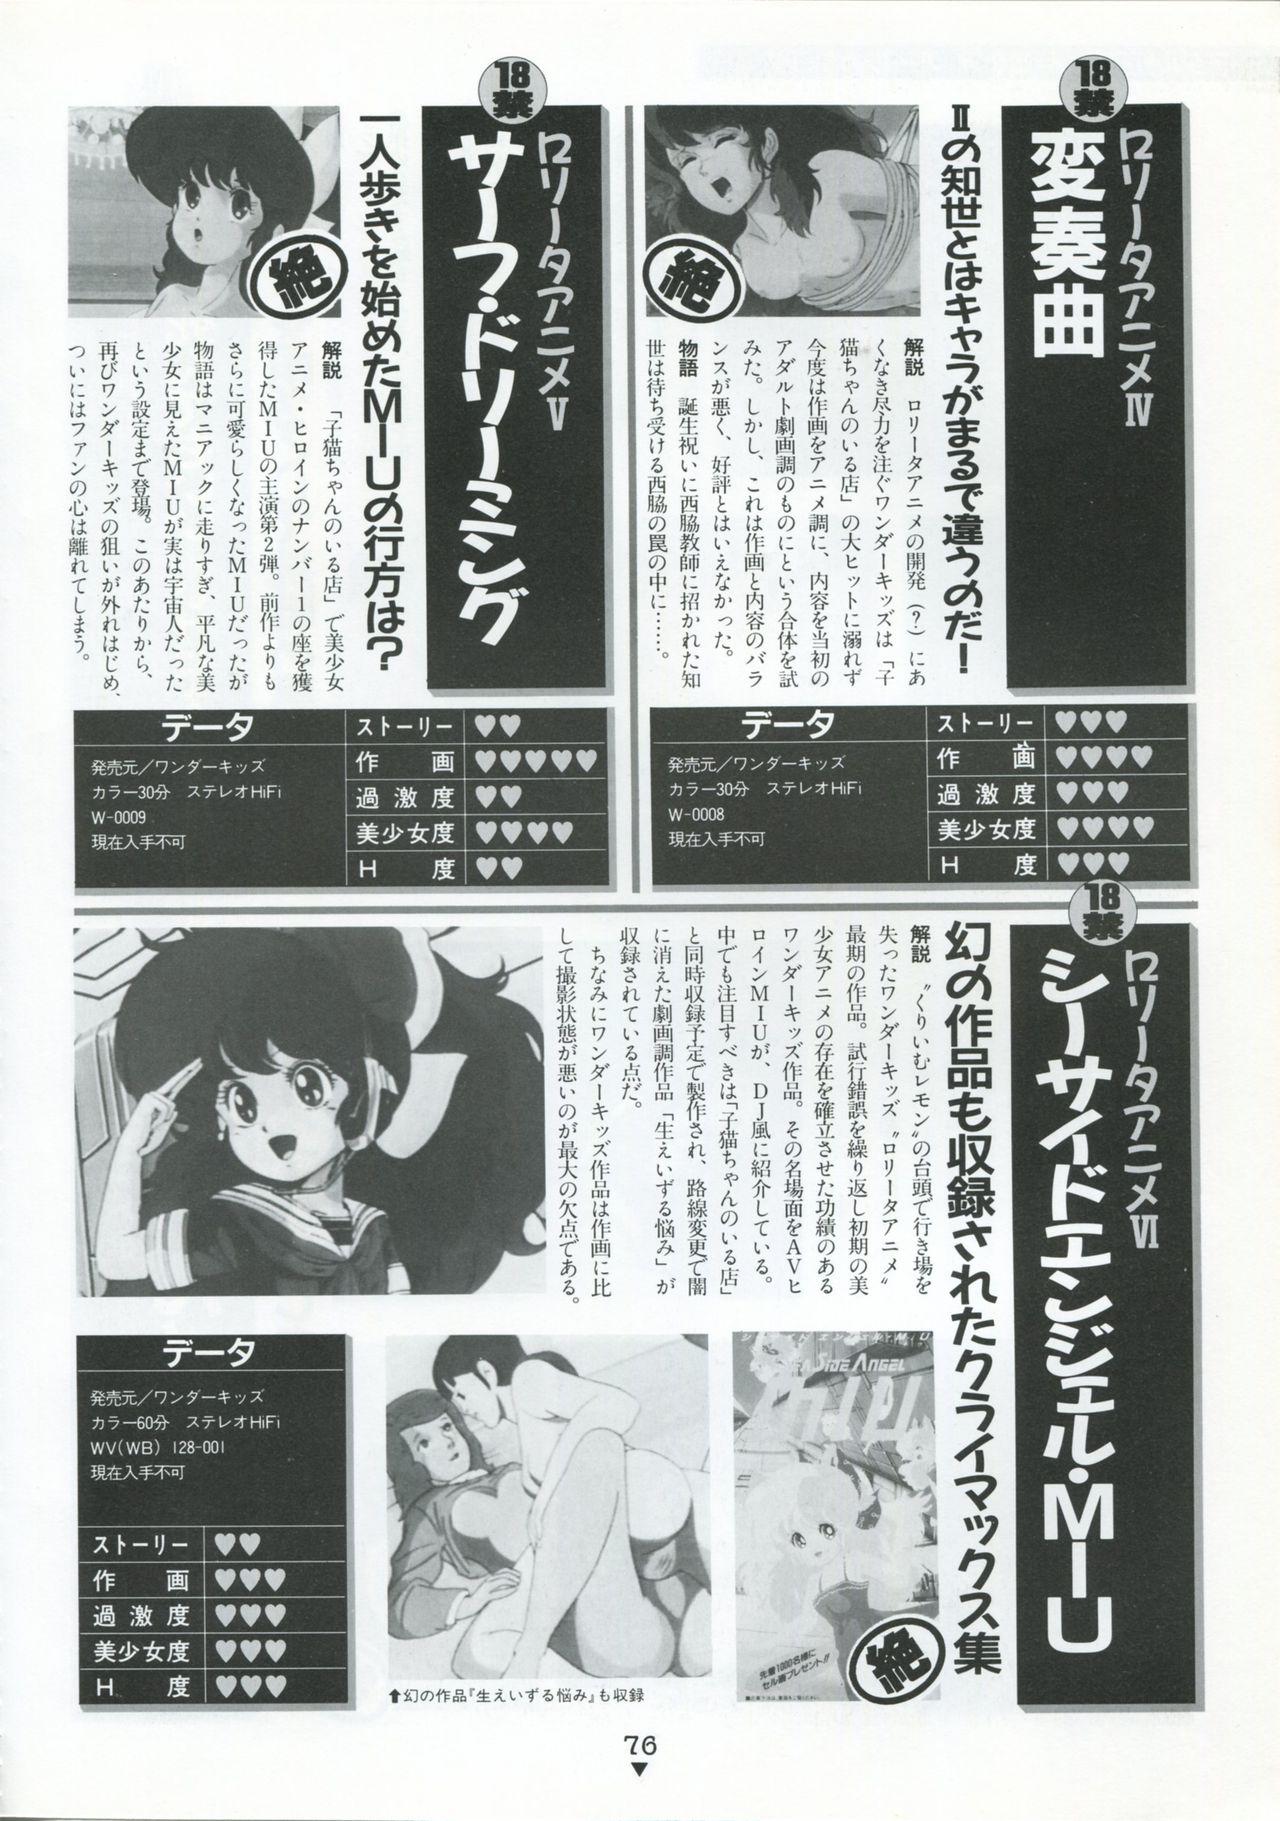 Bishoujo Anime Daizenshuu - Adult Animation Video Catalog 1991 71